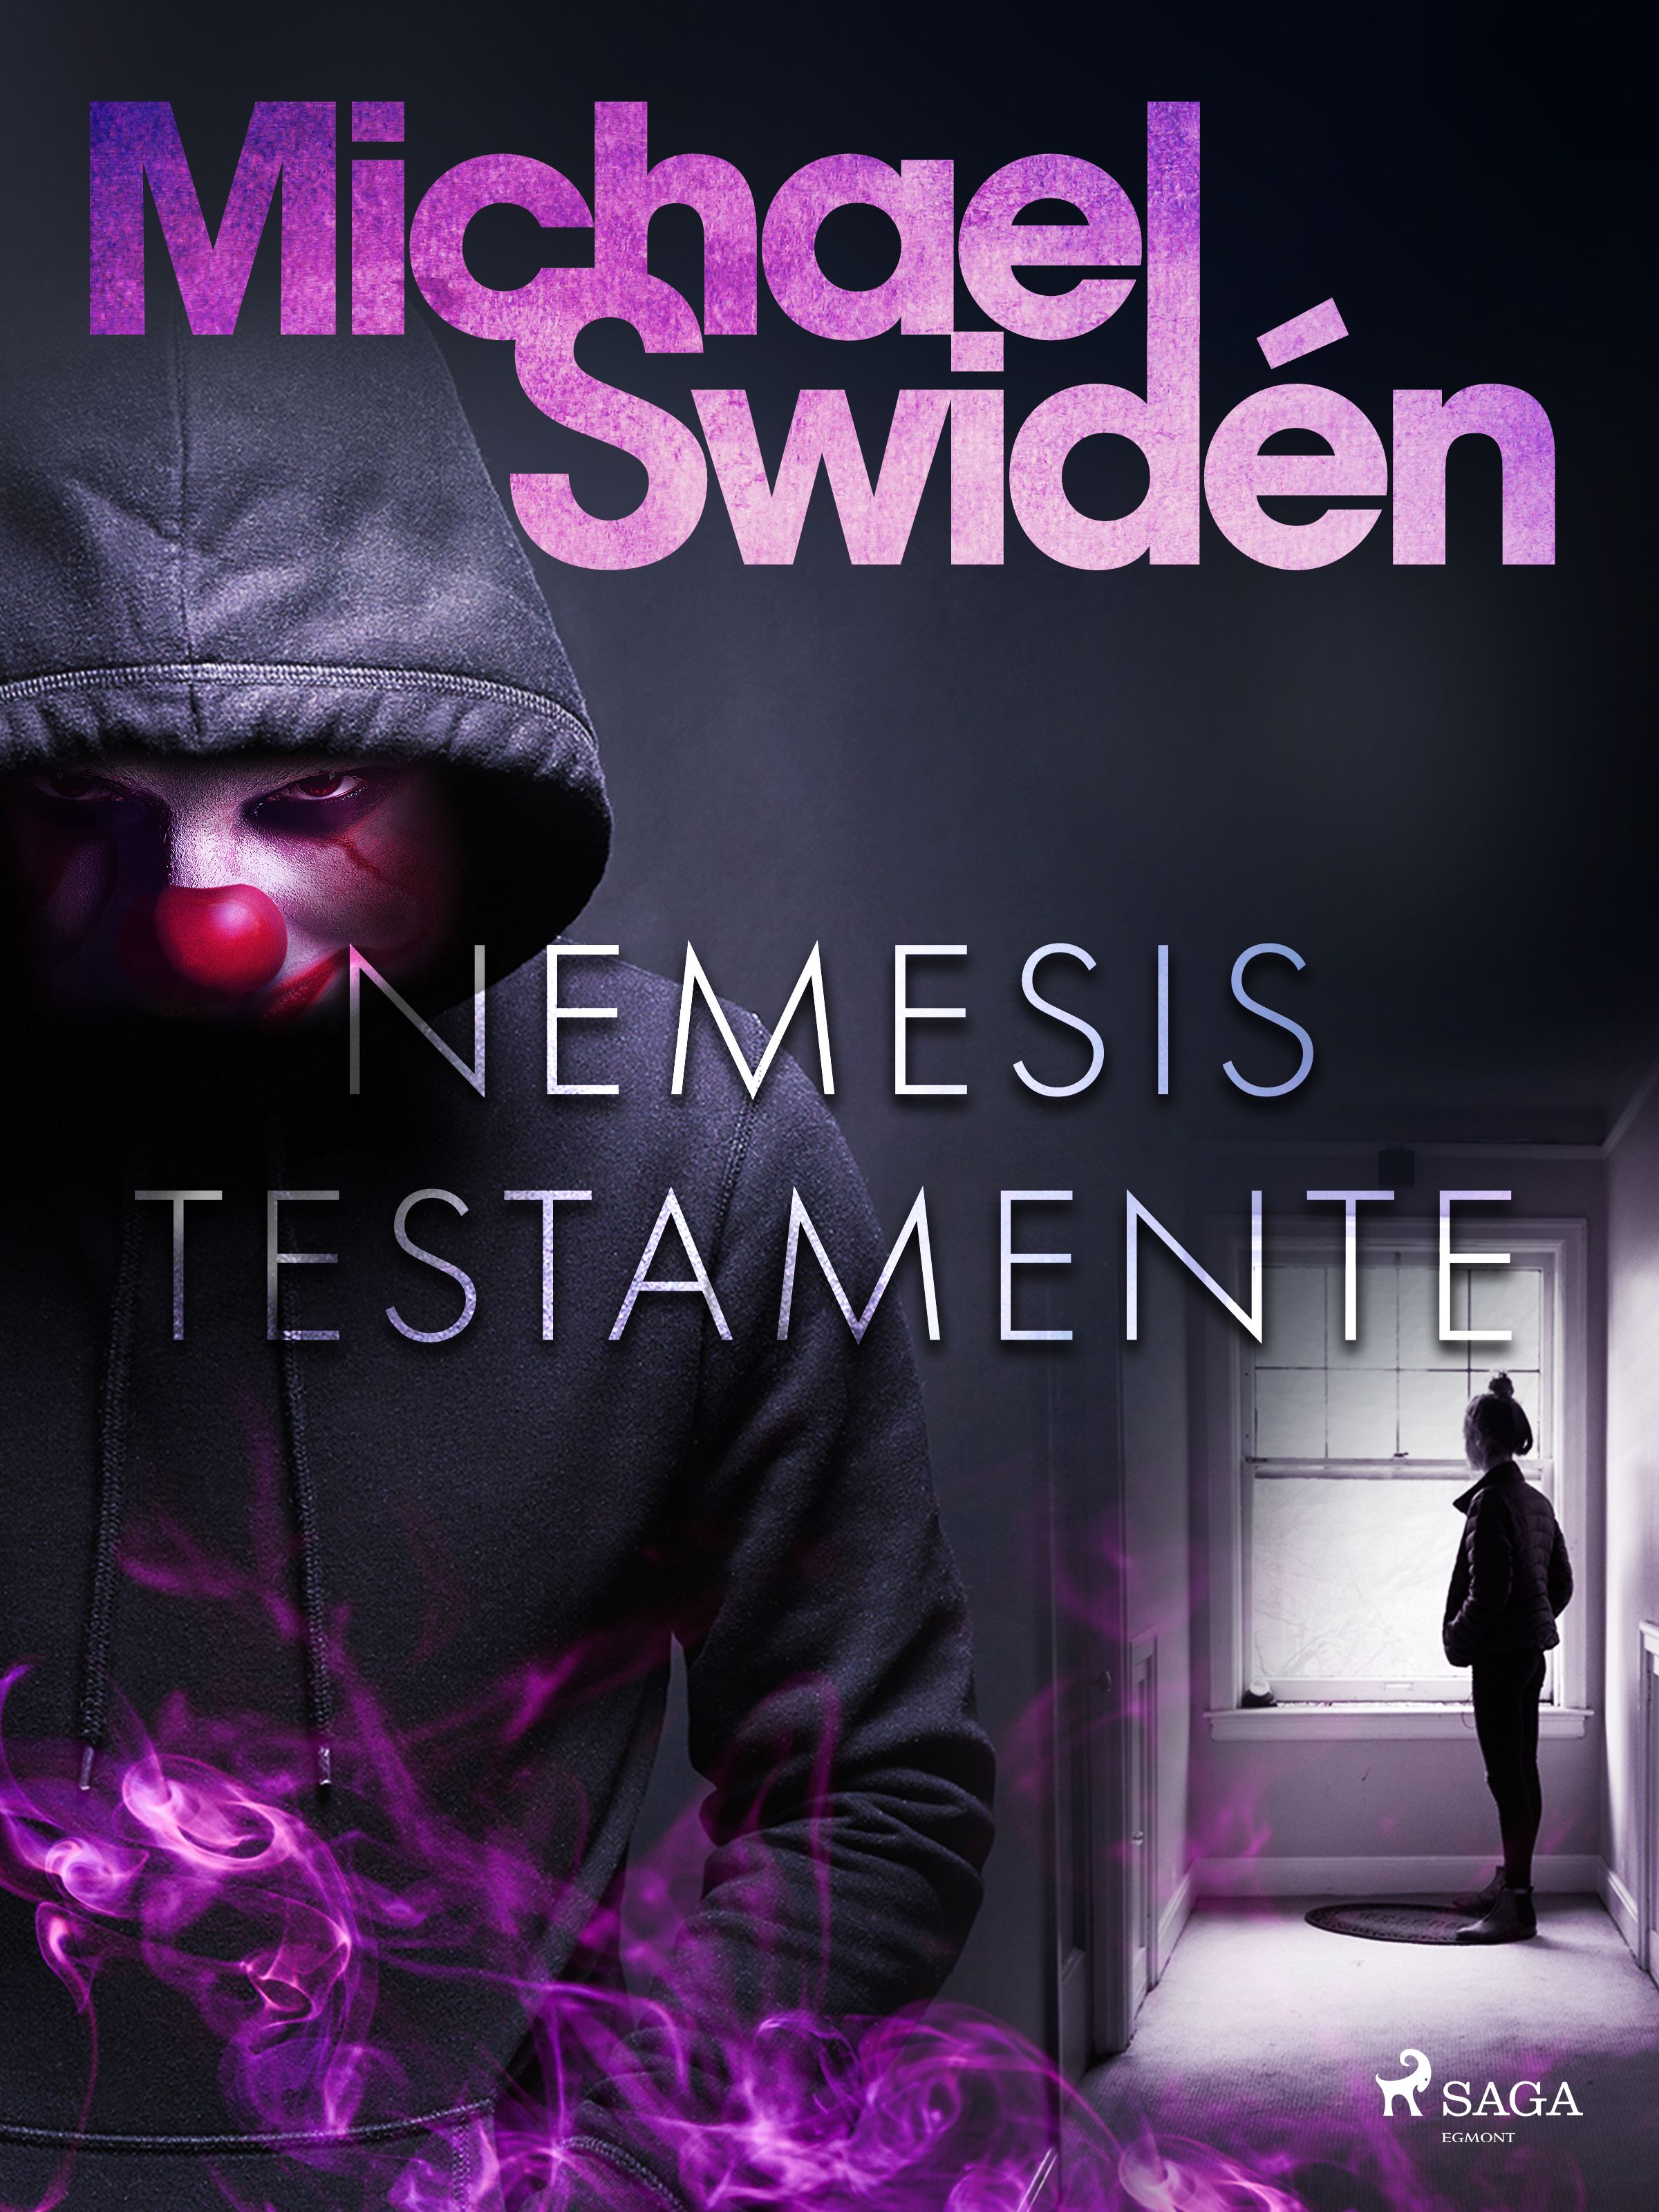 Nemesis testamente, eBook by Michael Swidén